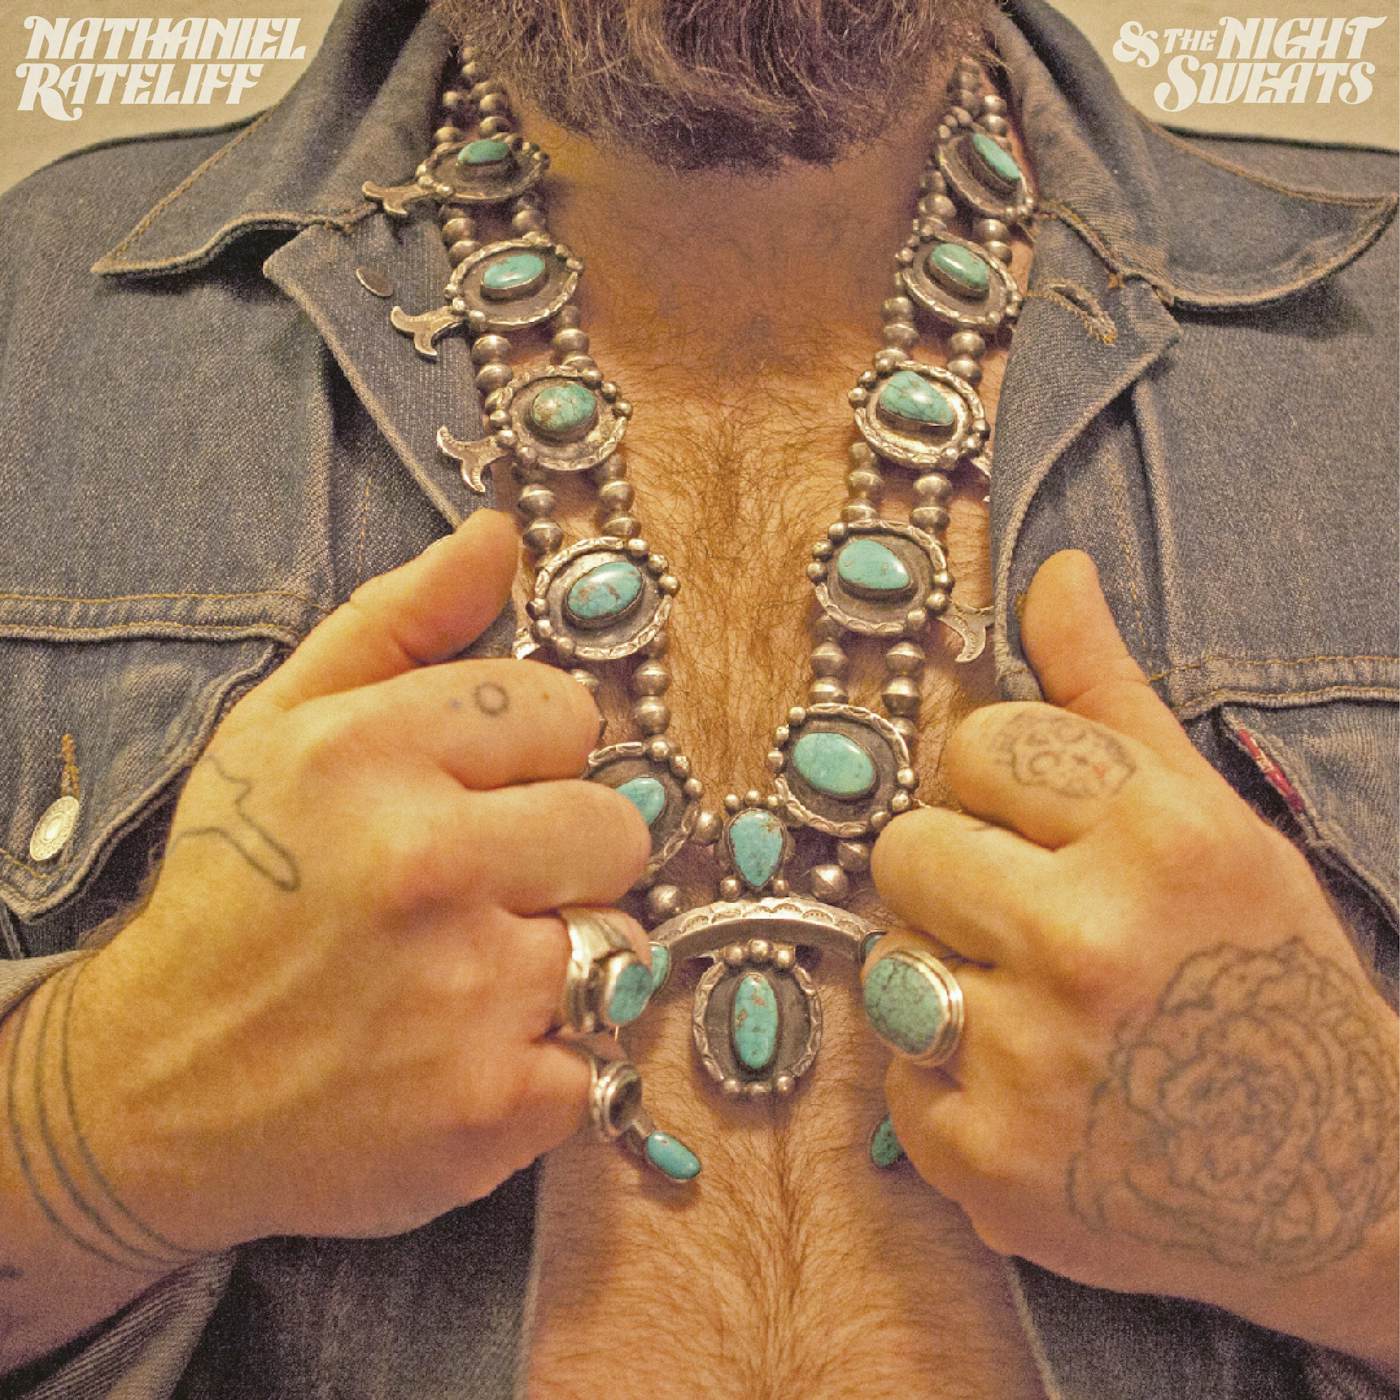 Nathaniel Rateliff & The Night Sweats Vinyl Record